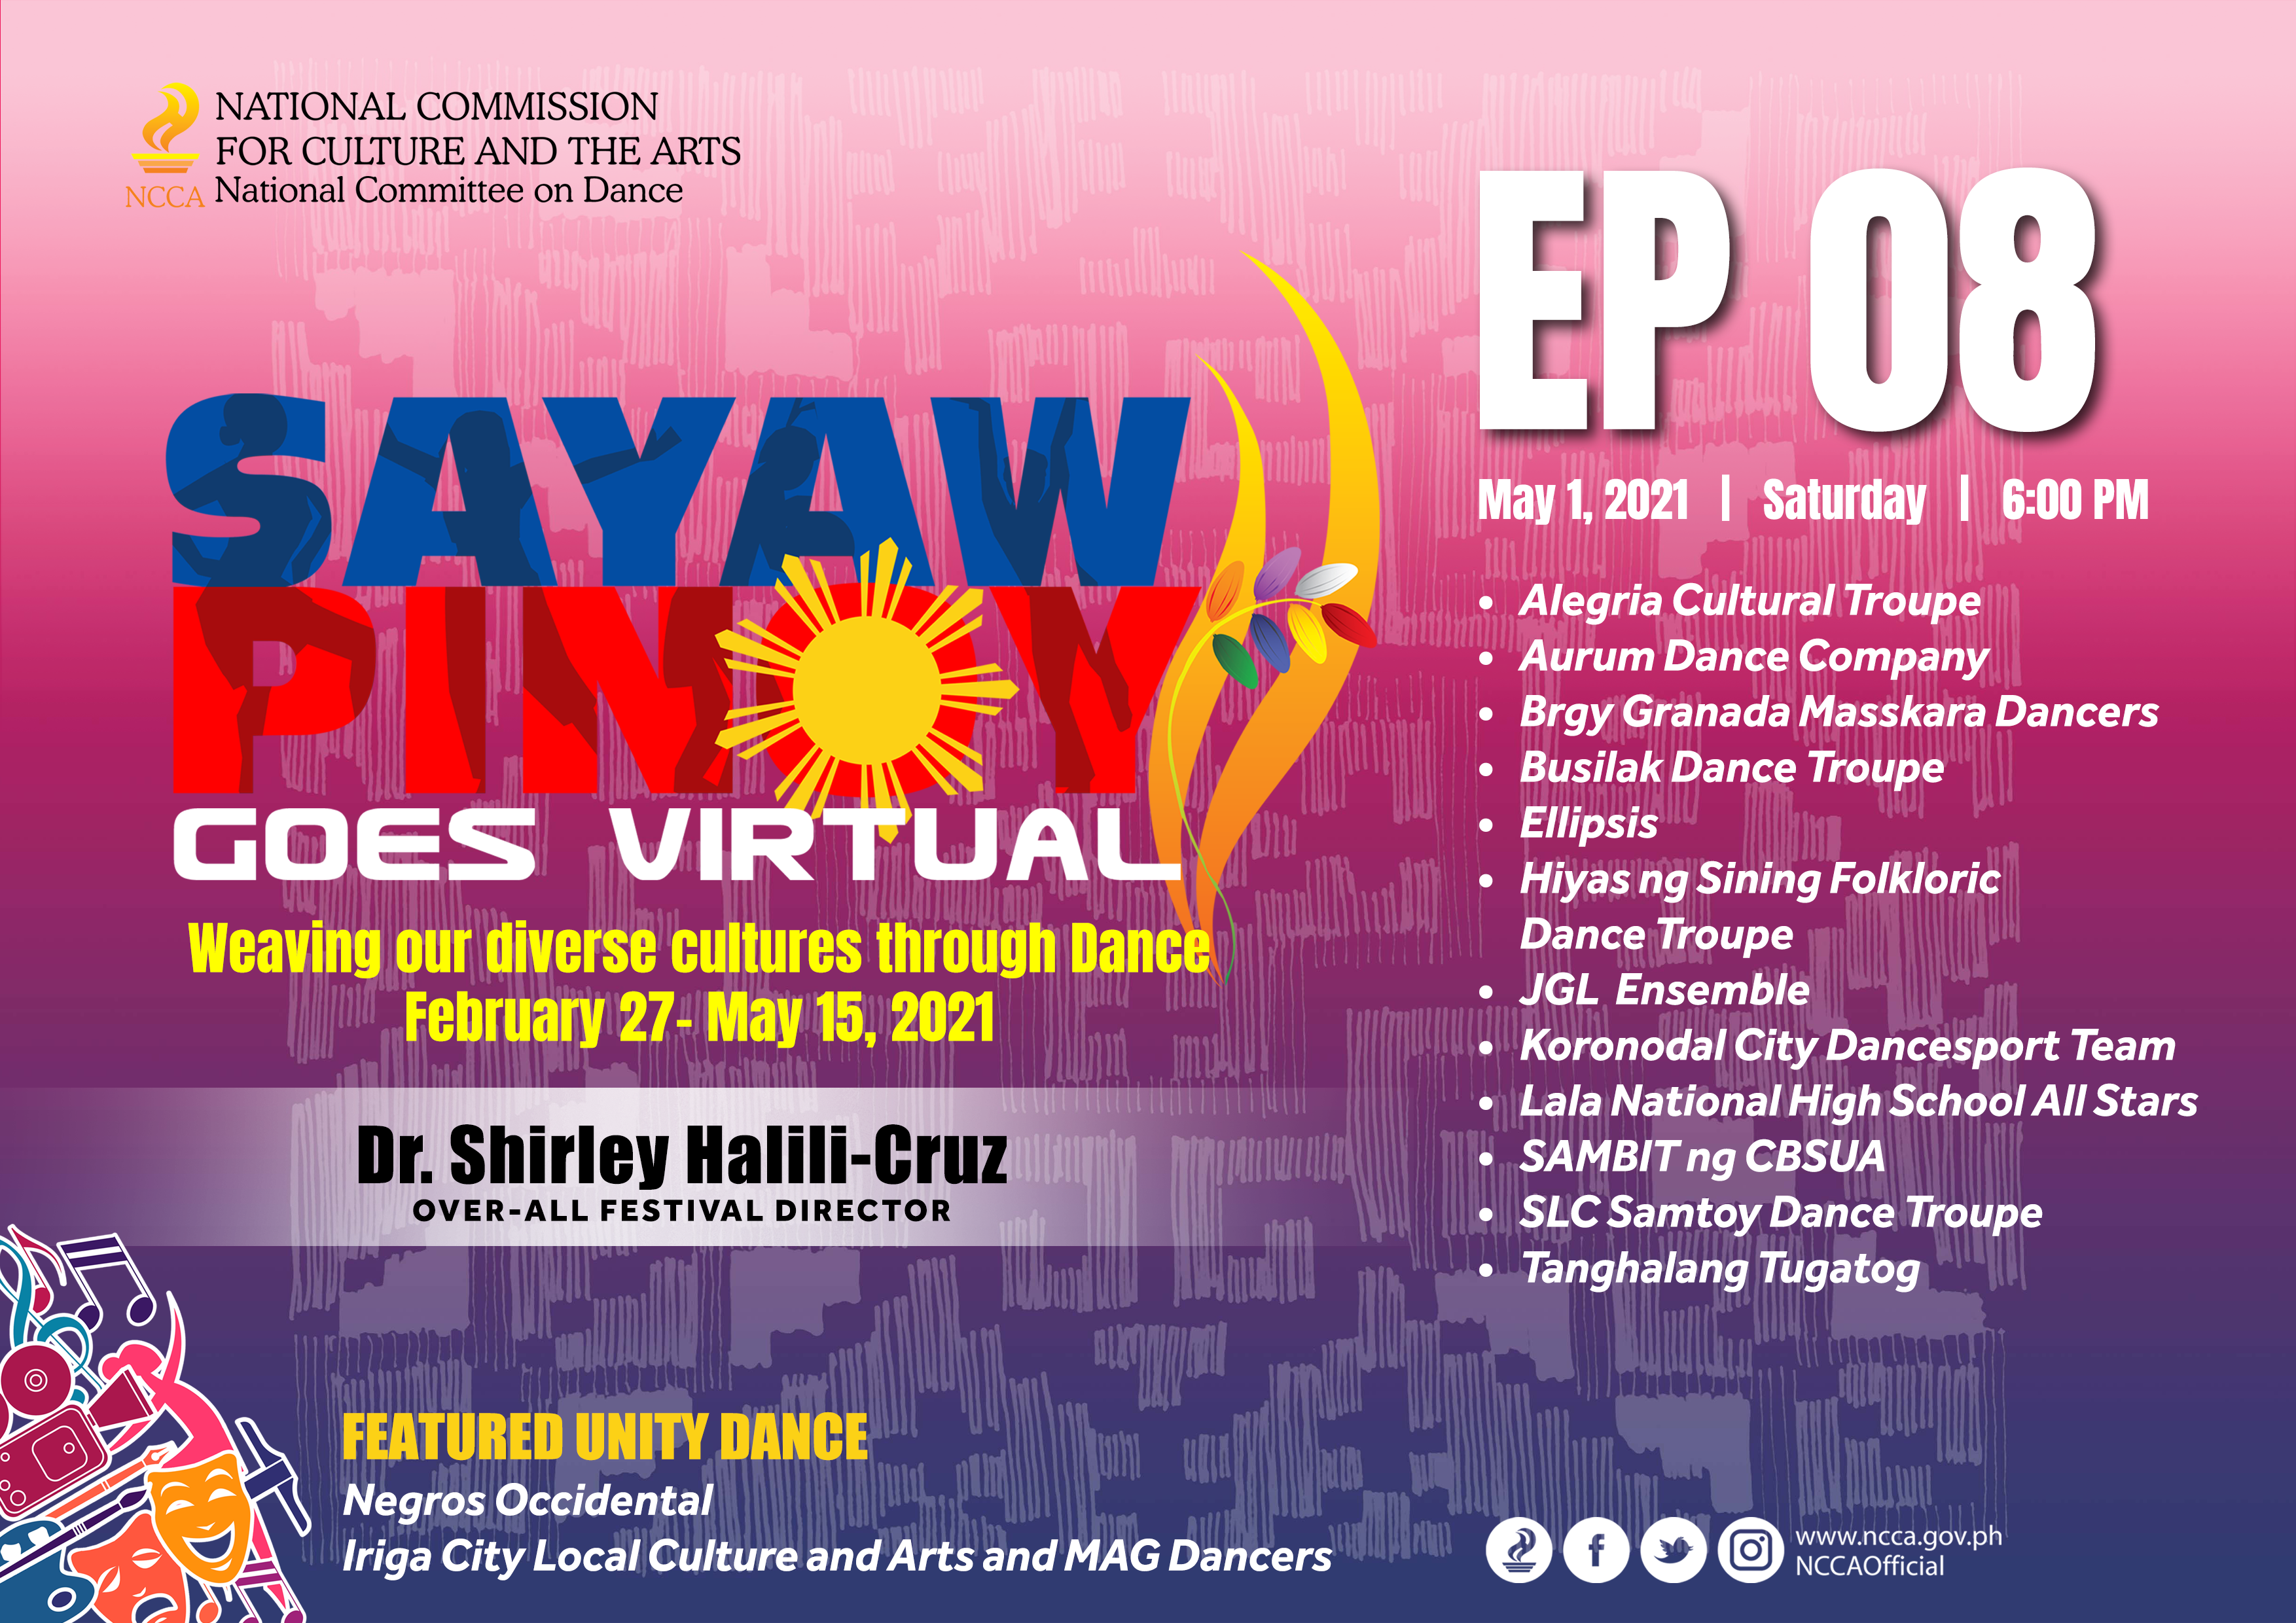 SAMBIT- CBSUA Calabanga, chosen for Sayaw Pinoy Goes Virtual